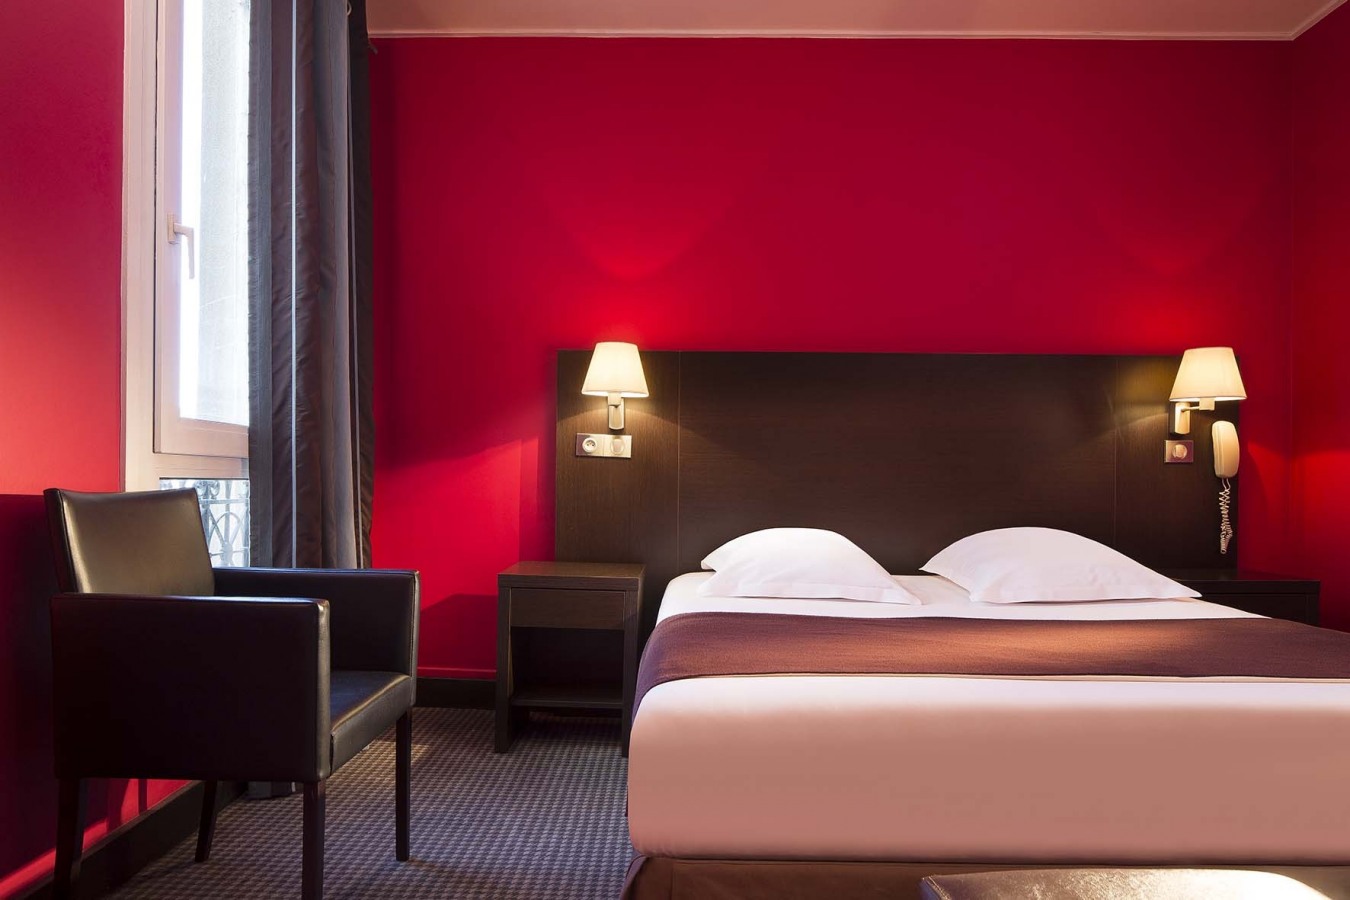 Hotel Sophie Germain - Disconoscimento